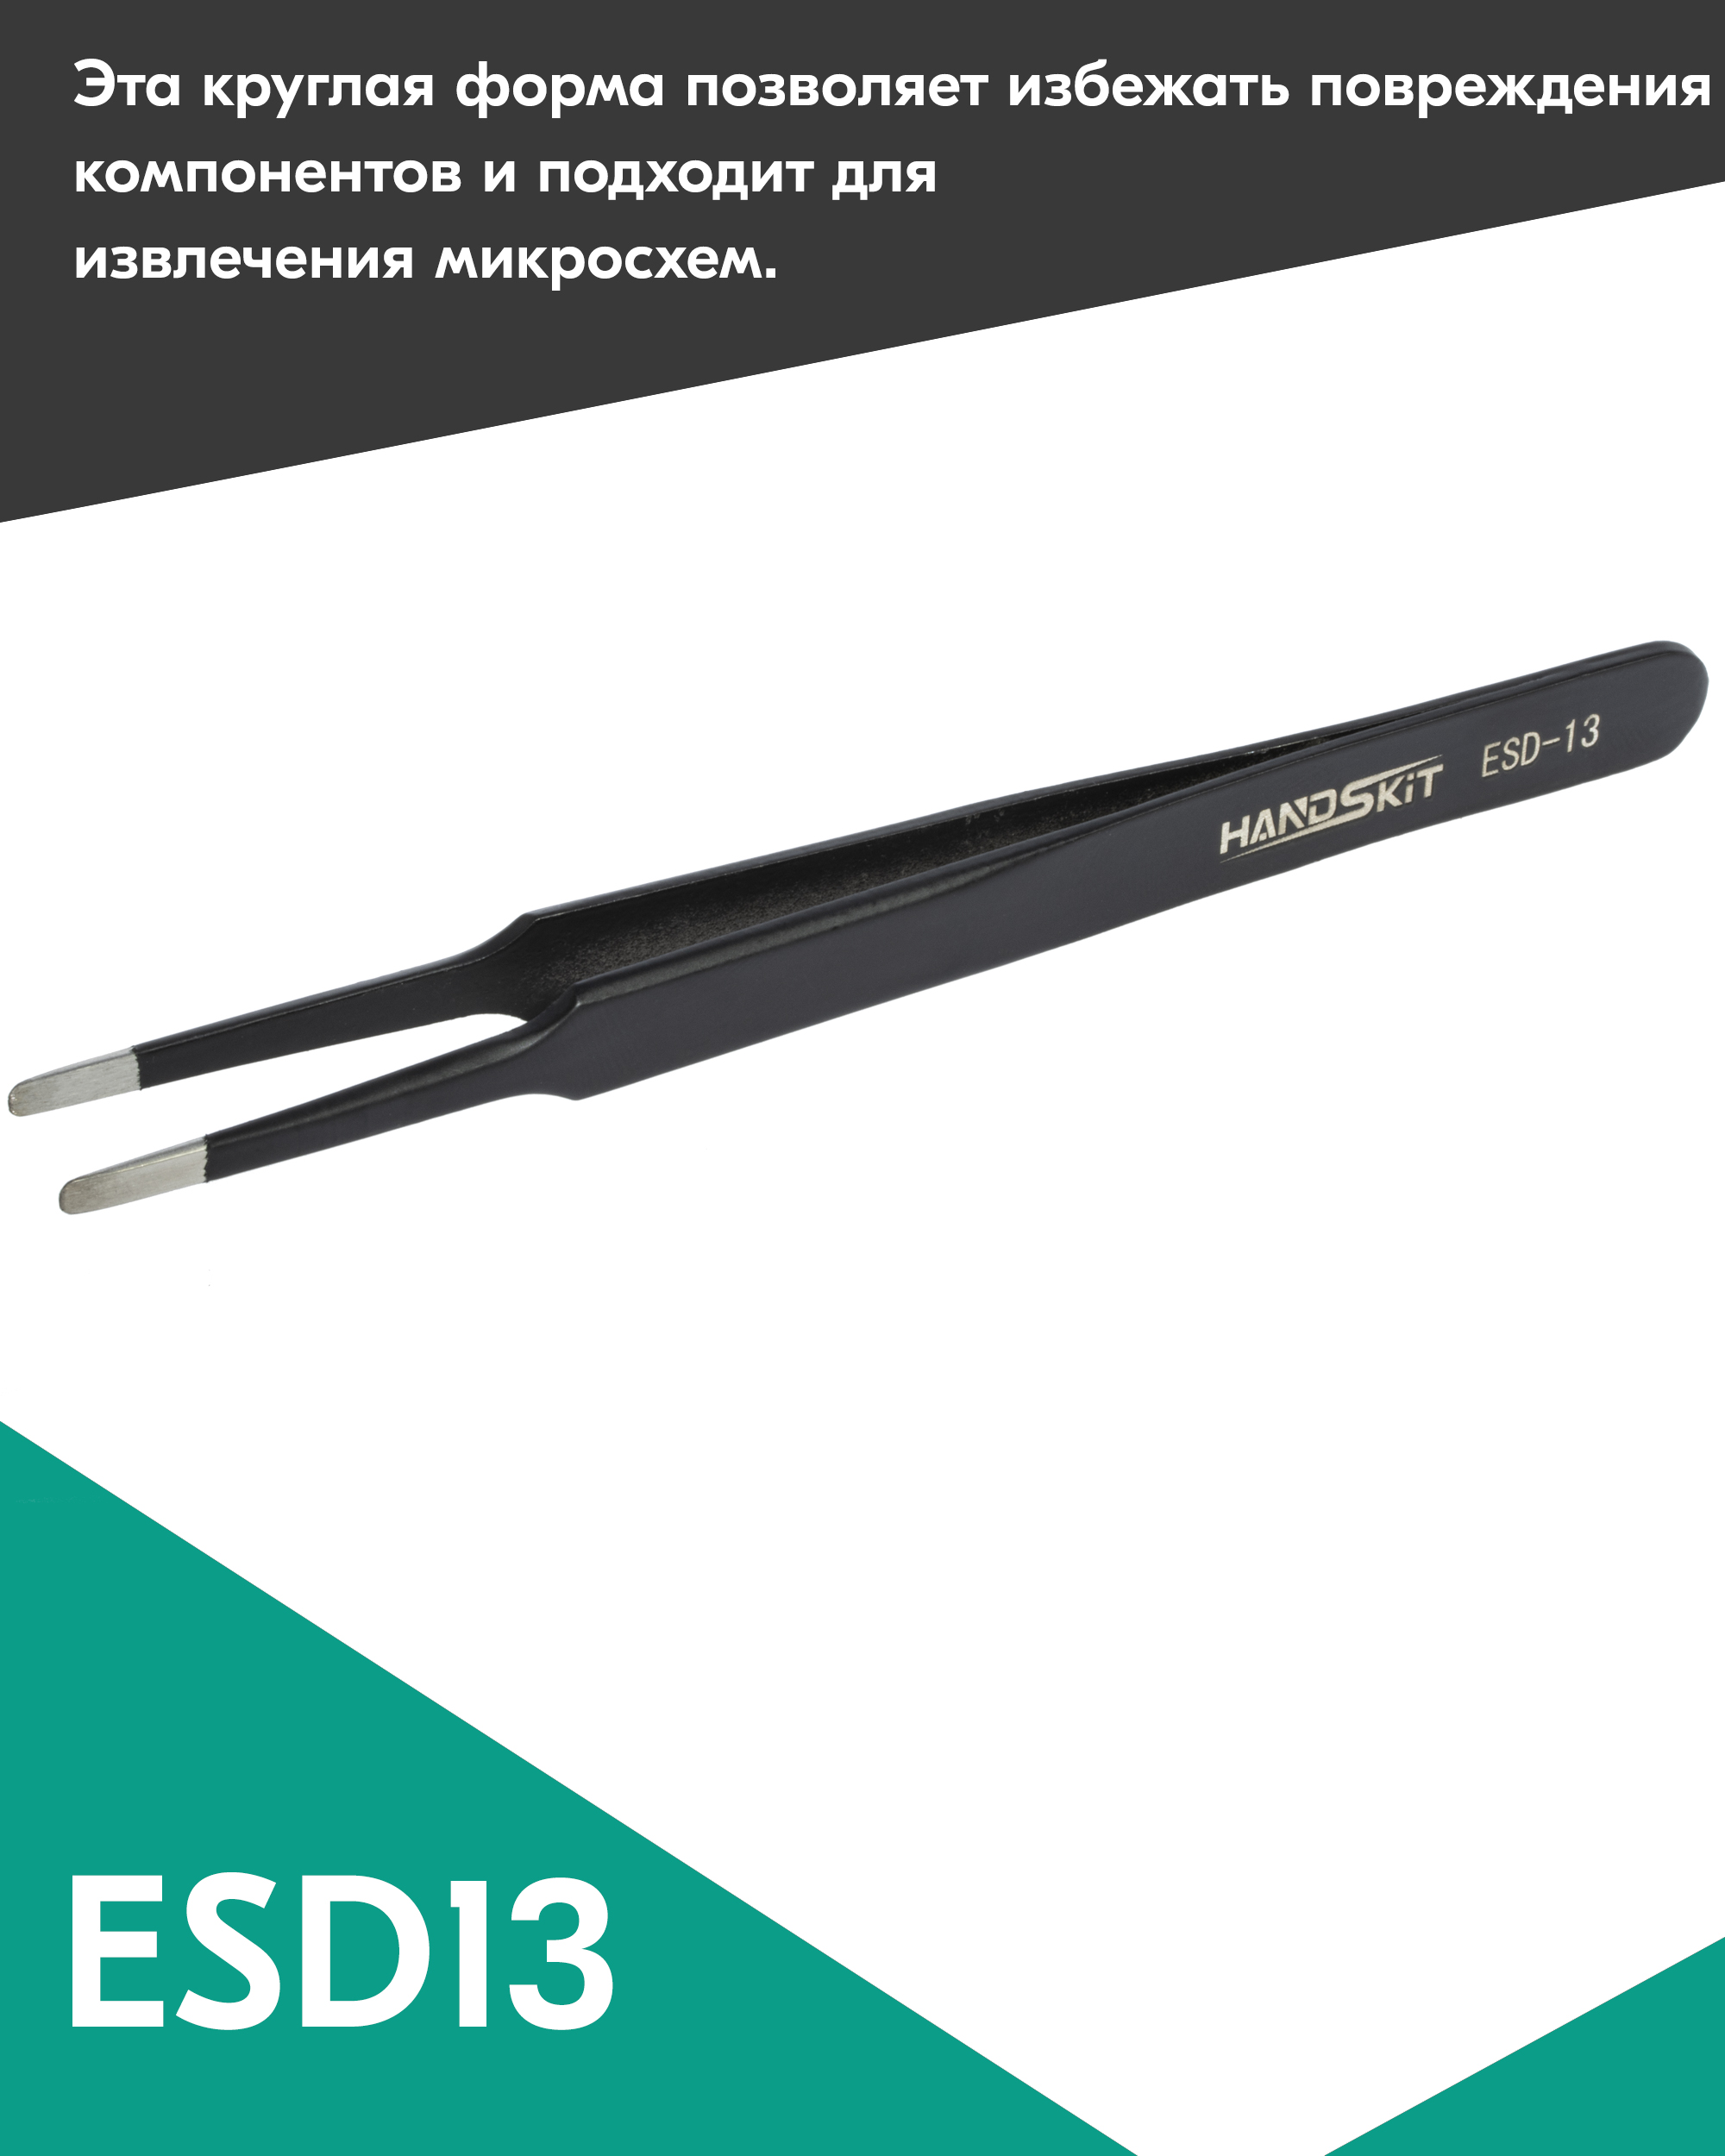 Пинцет диэлектрический HANDSKIT ESD13 (120 мм)